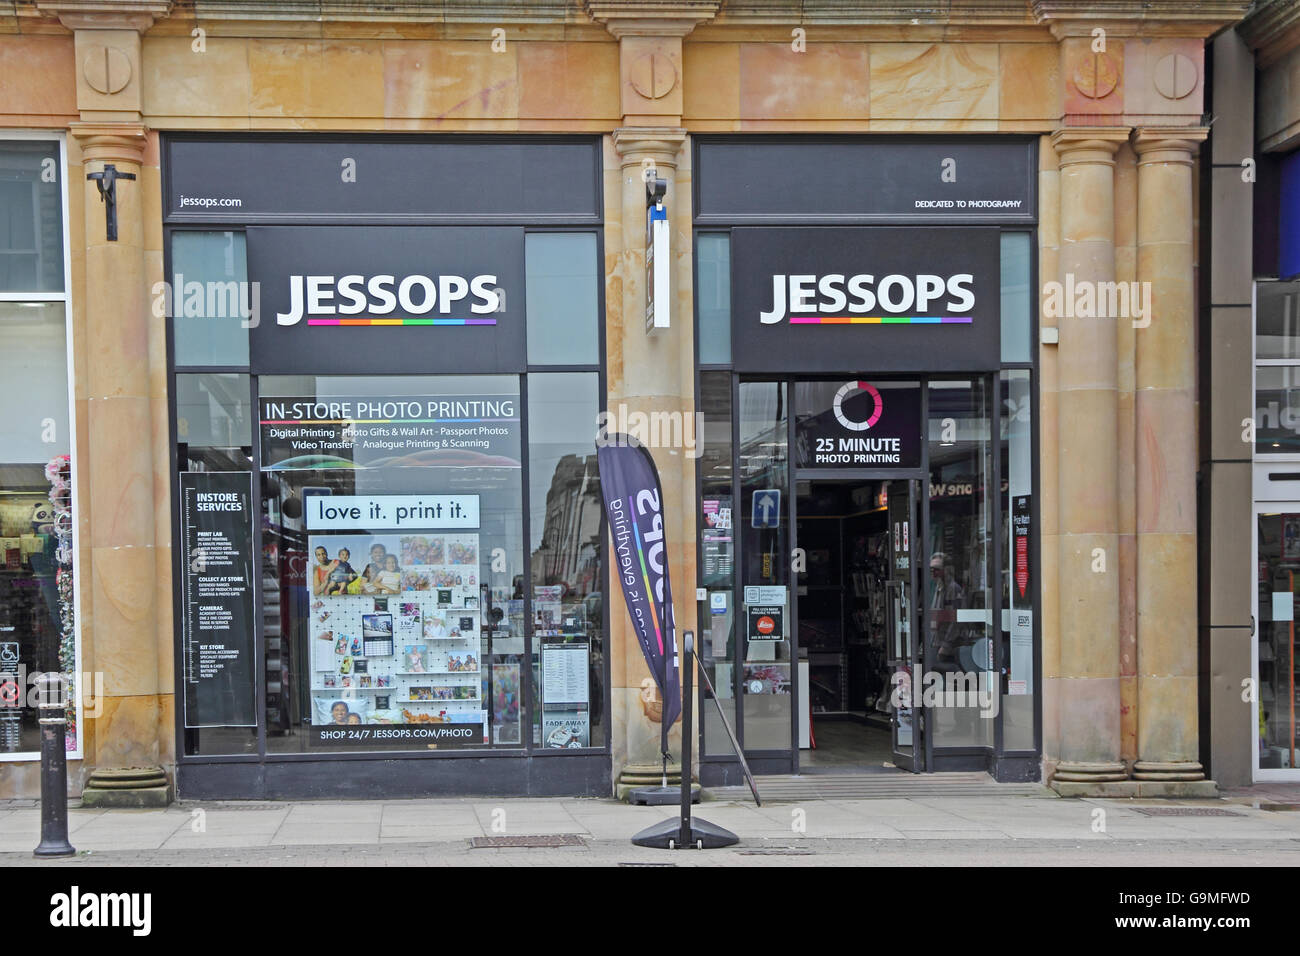 Jessops photographic shop, Harrogate Stock Photo - Alamy